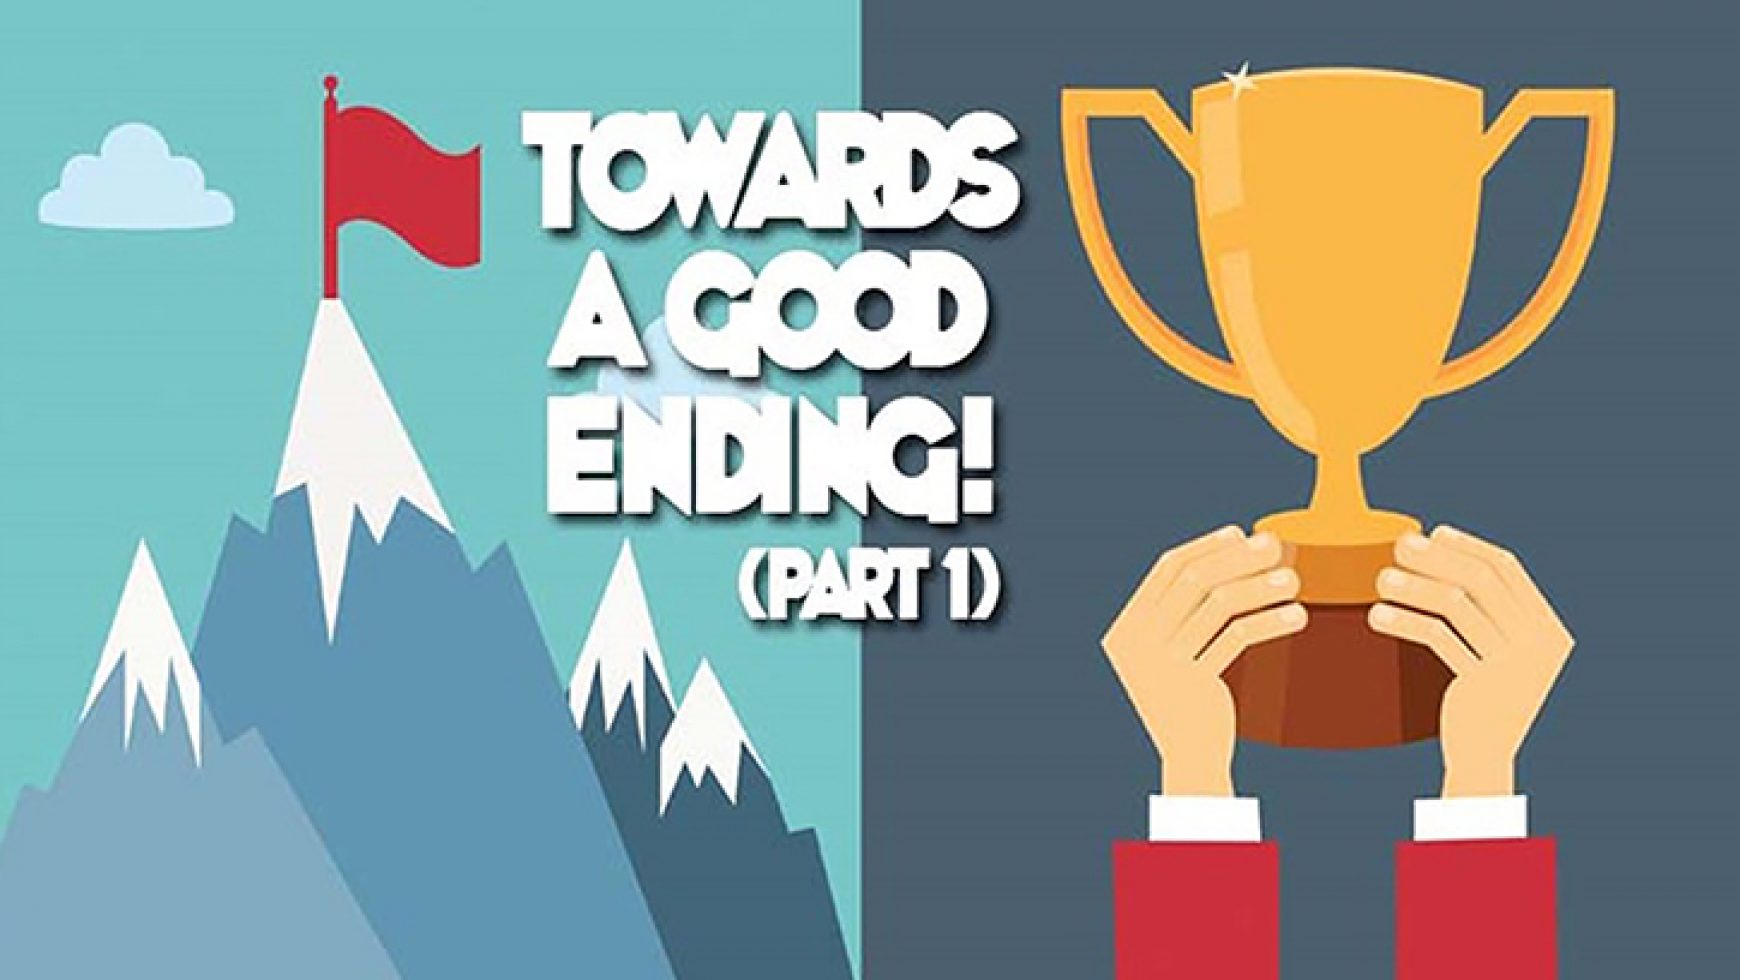 Towards A Good Ending (Part 1)